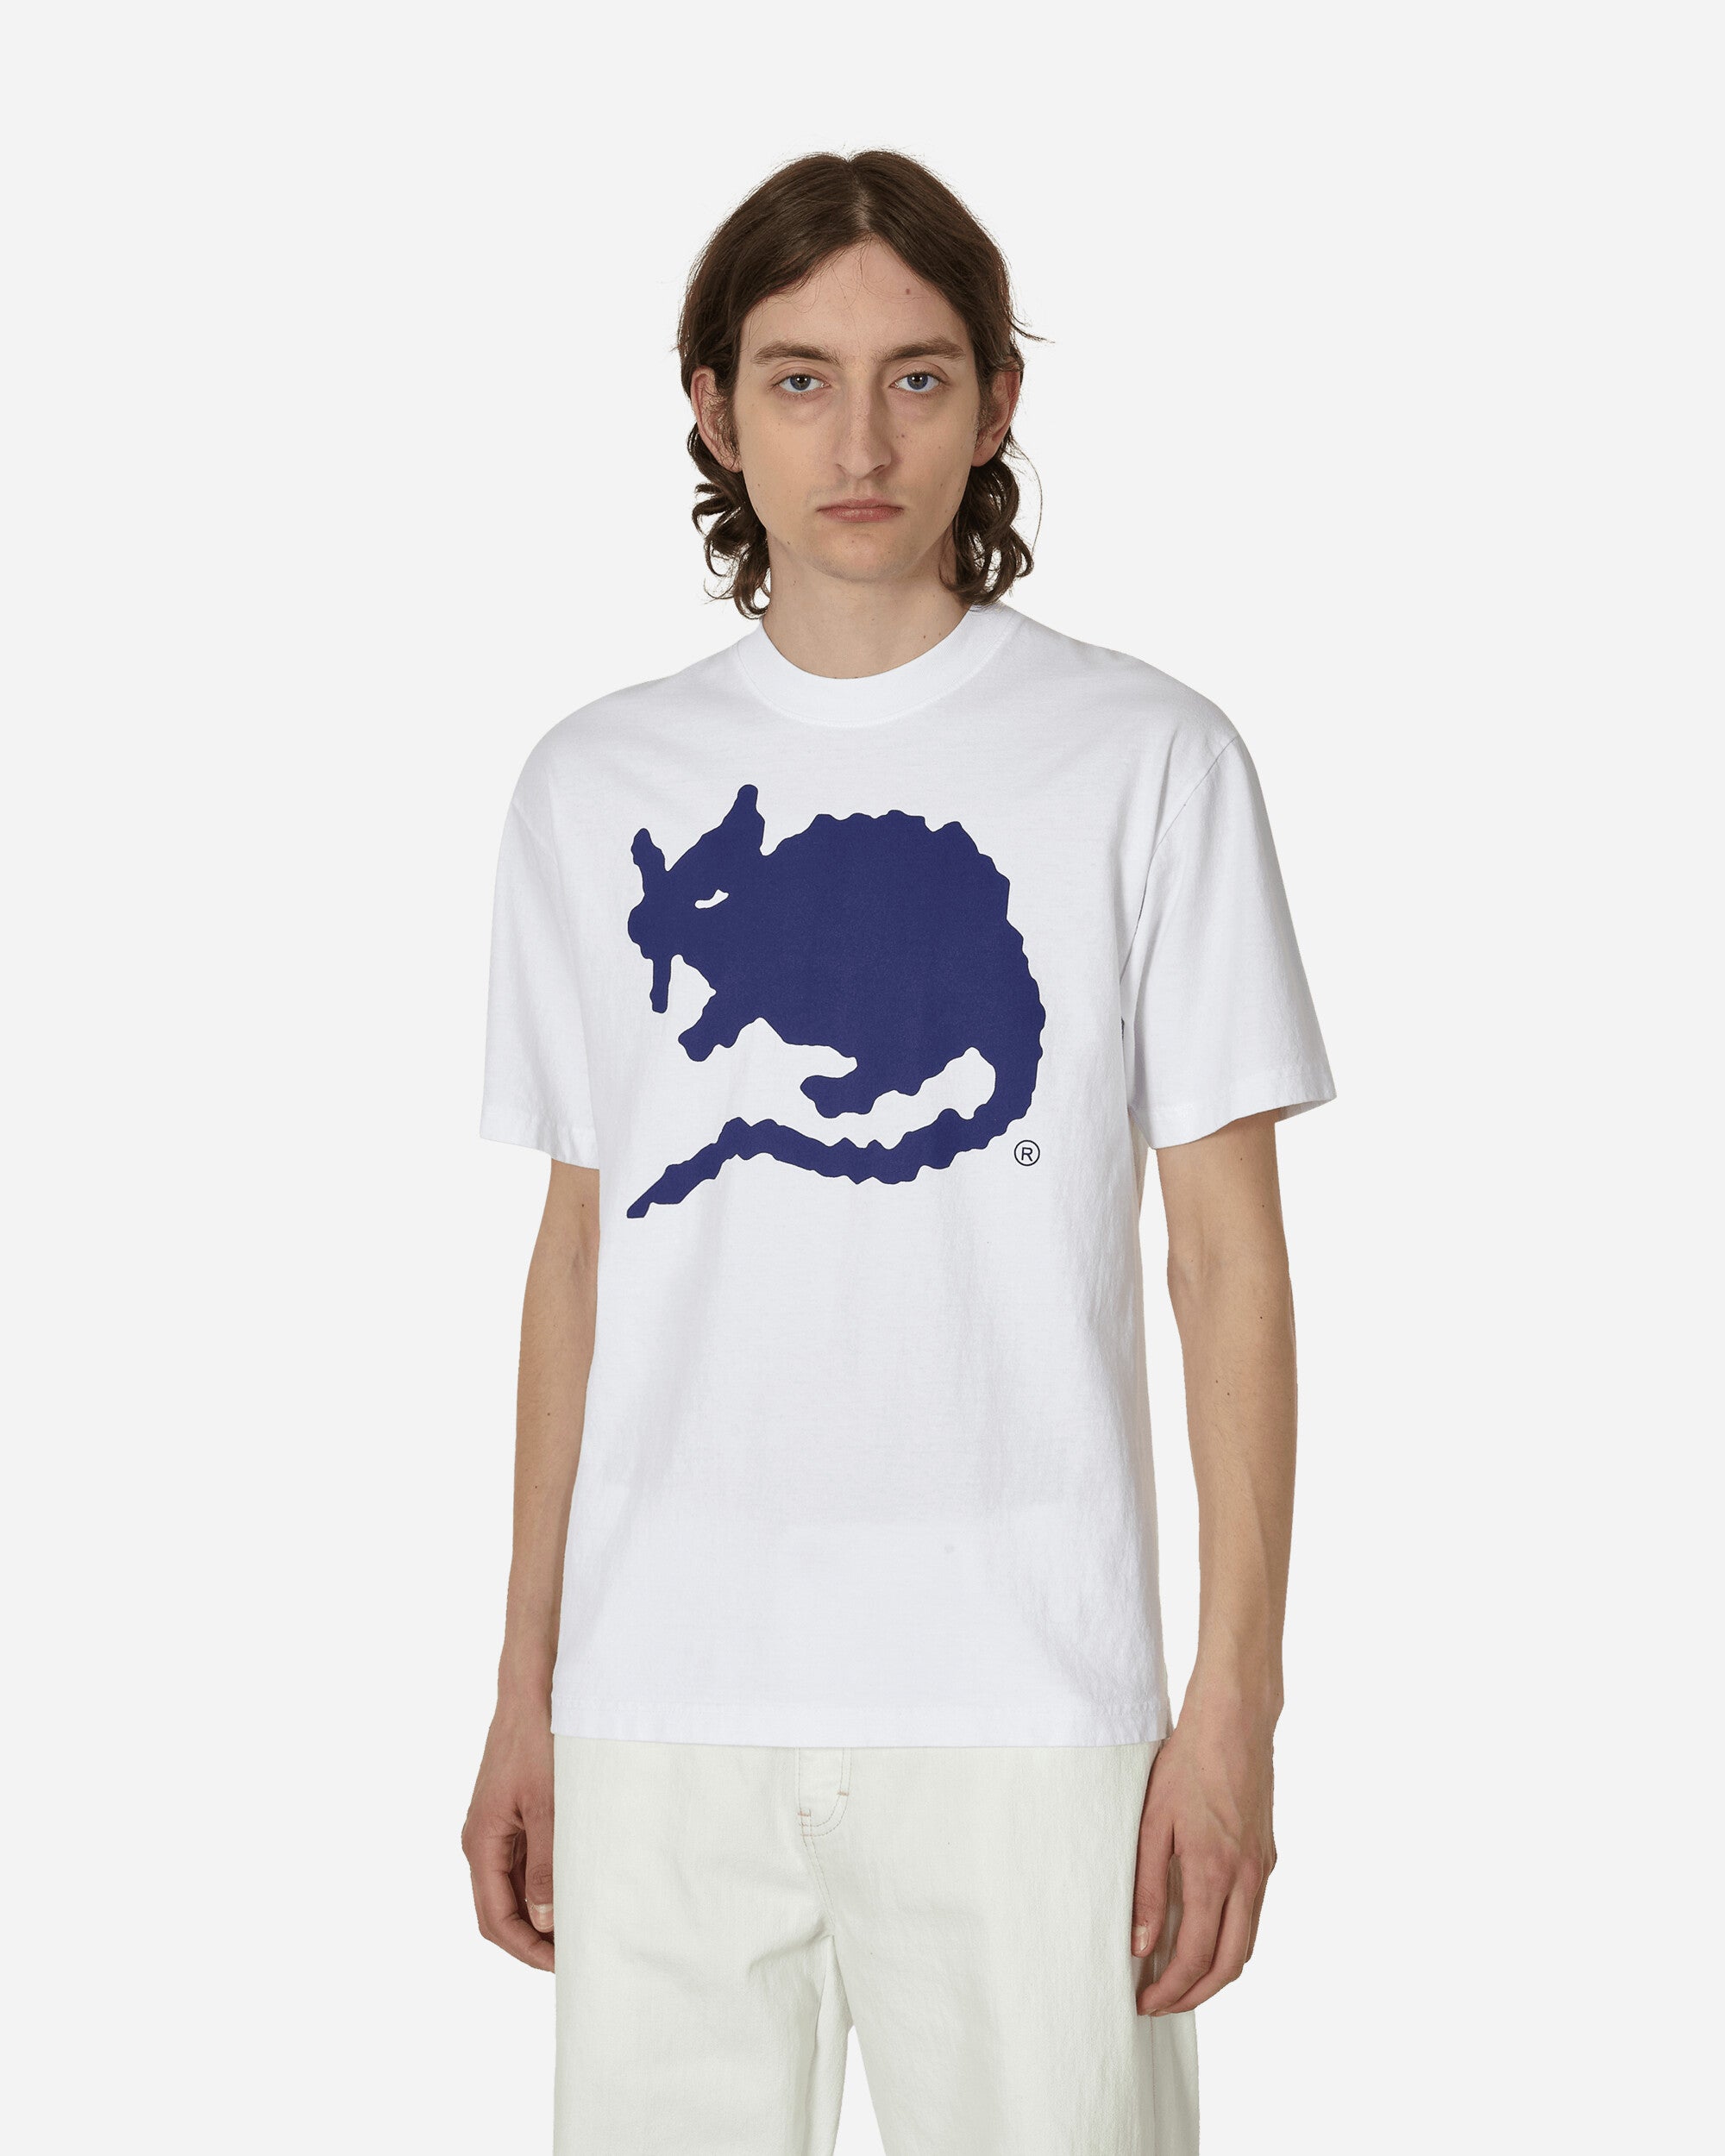 Stray Rats Pixel Rat T-Shirt White - Slam Jam® Official Store